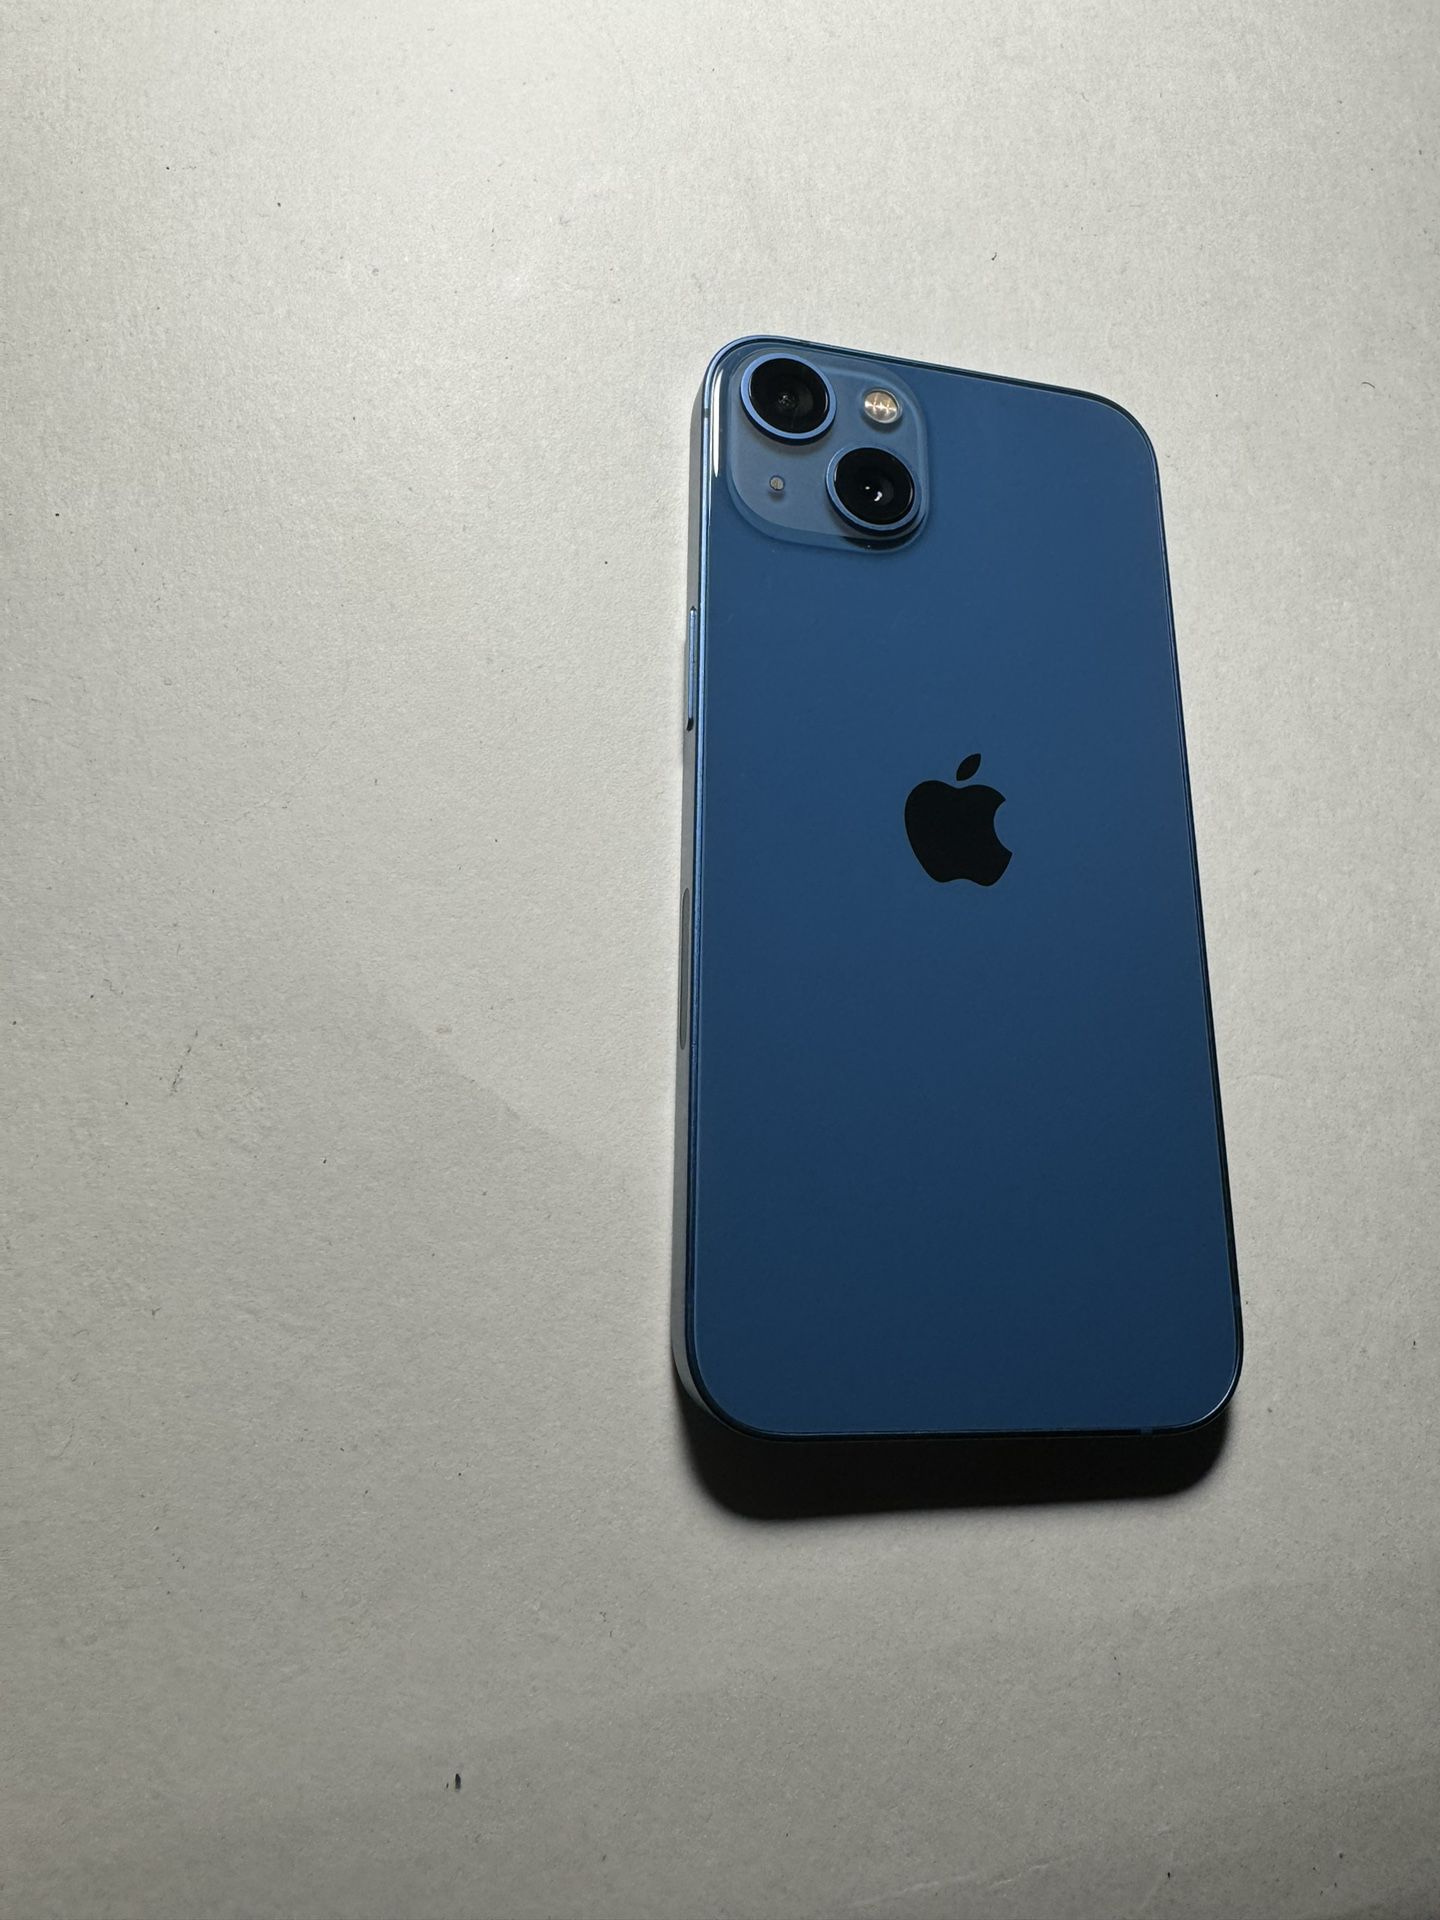 iPhone 13 Blue Factory unlocked 128gb